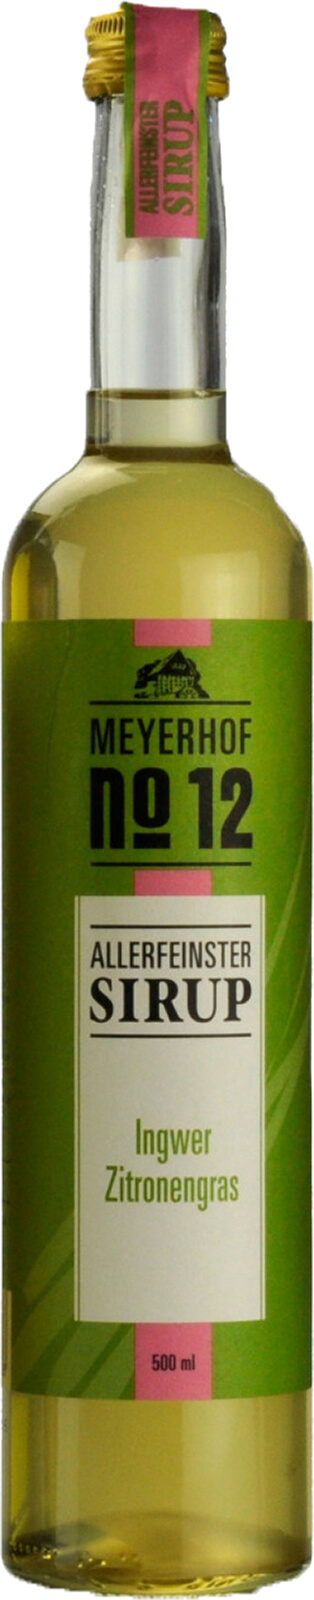 Meyerhof No. 12 Ingwer-Zitronengras Sirup 0,5 Liter